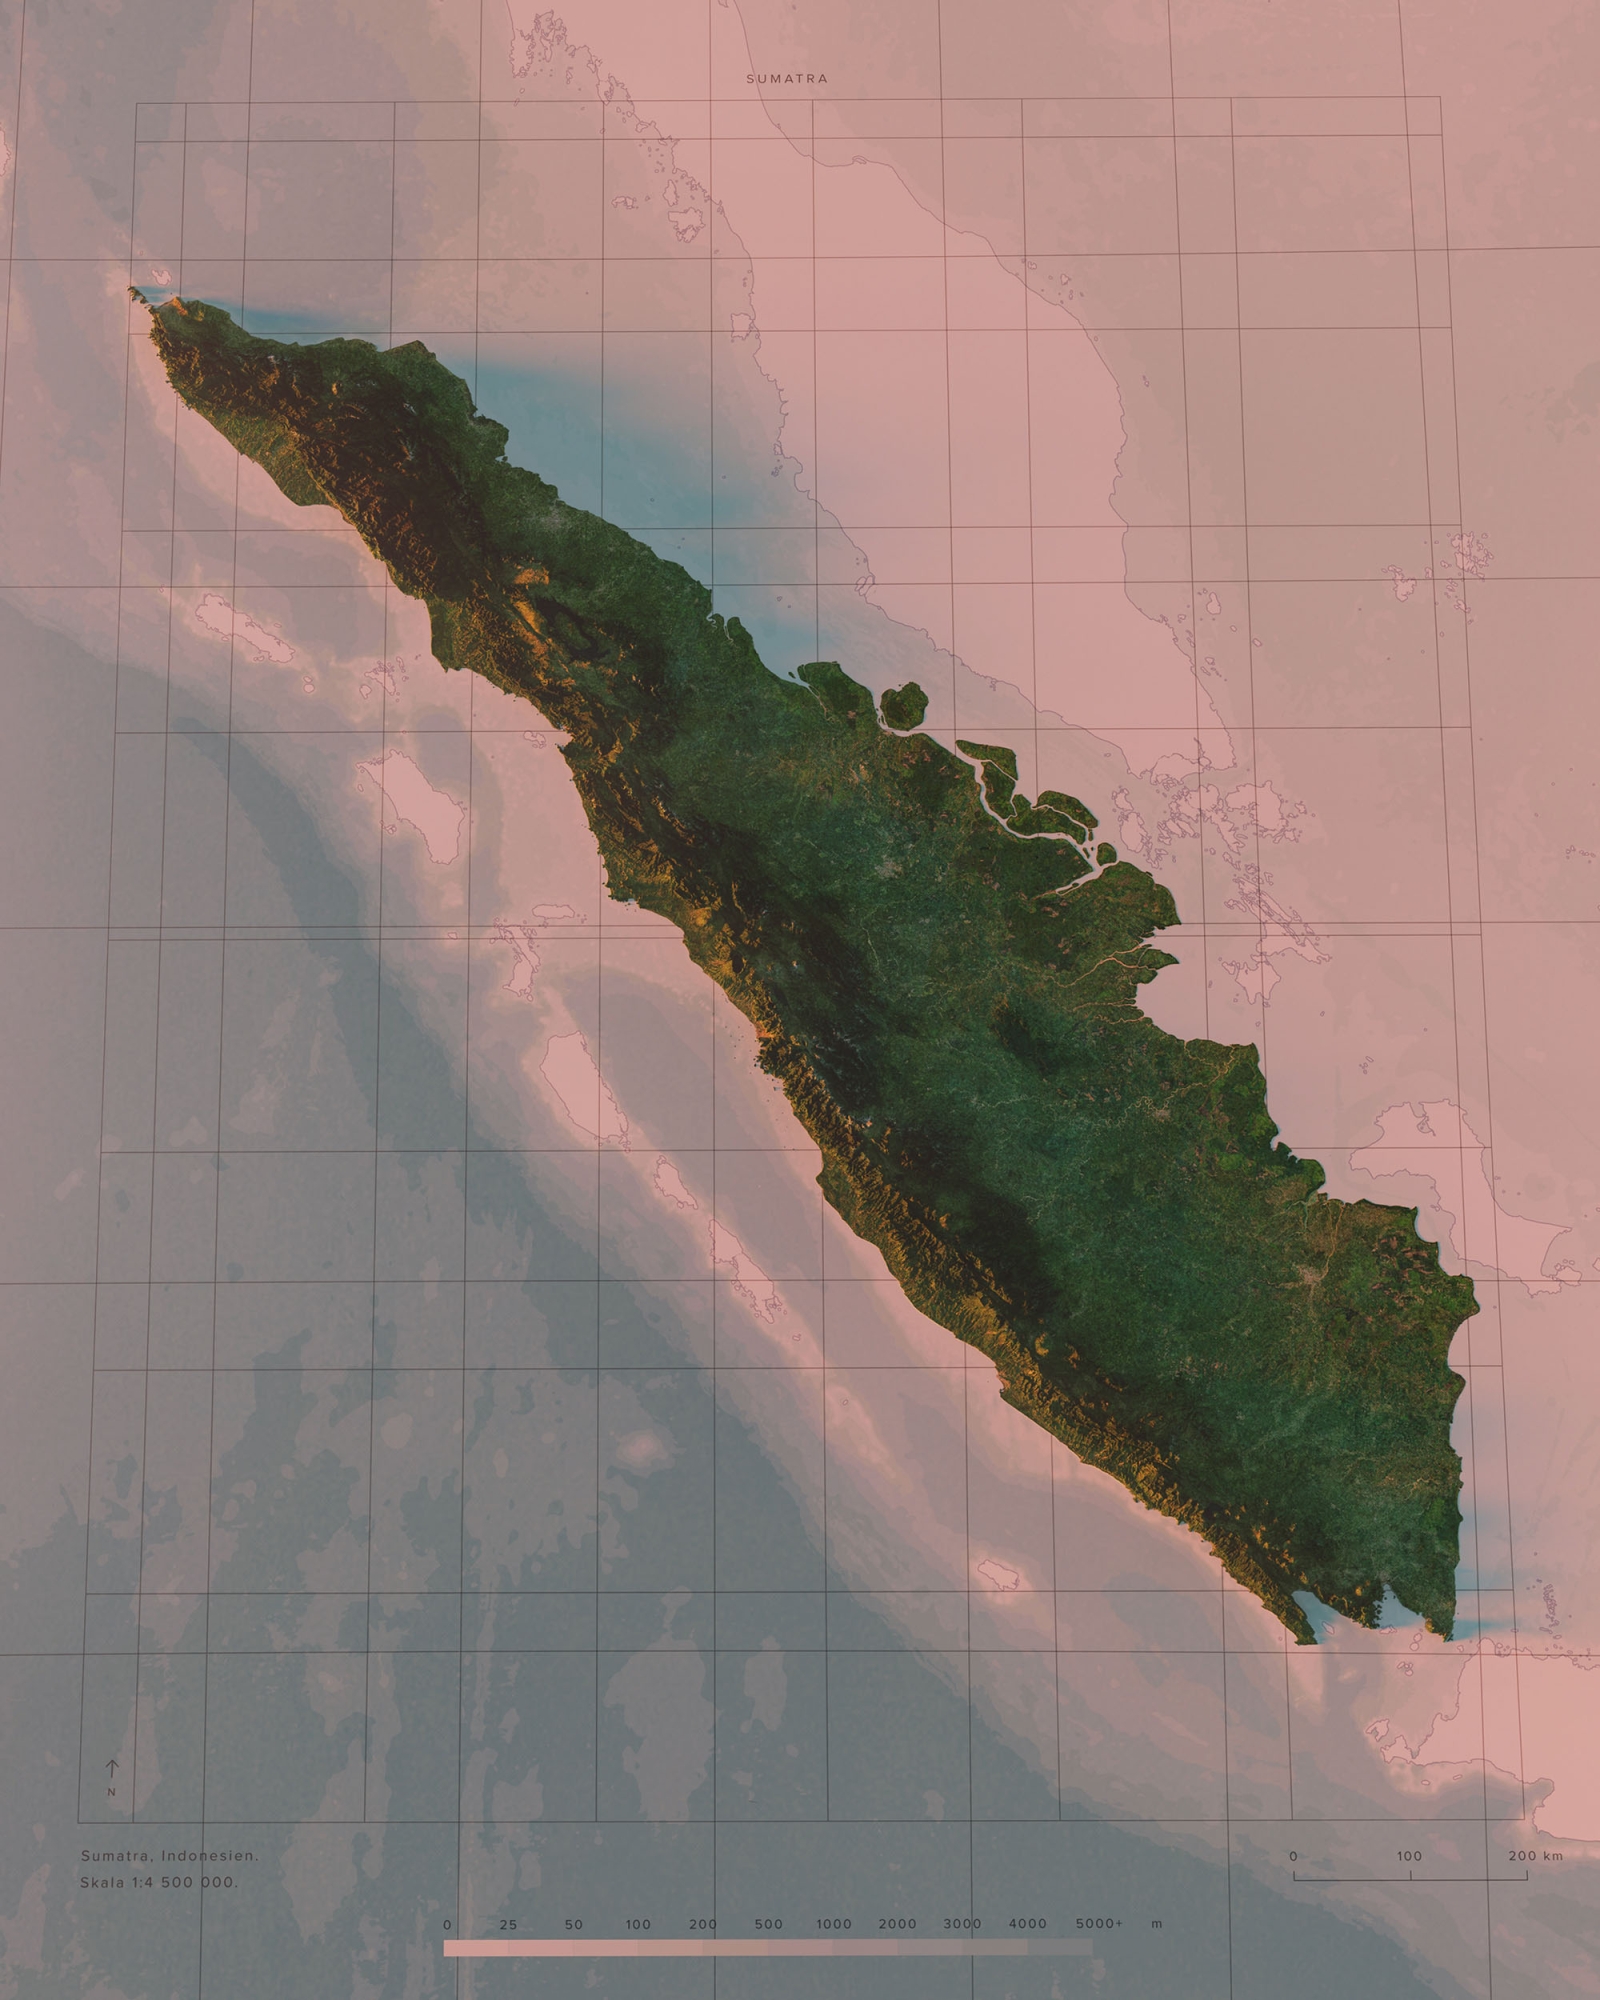 Sumatra topografisk karta, detaljbild